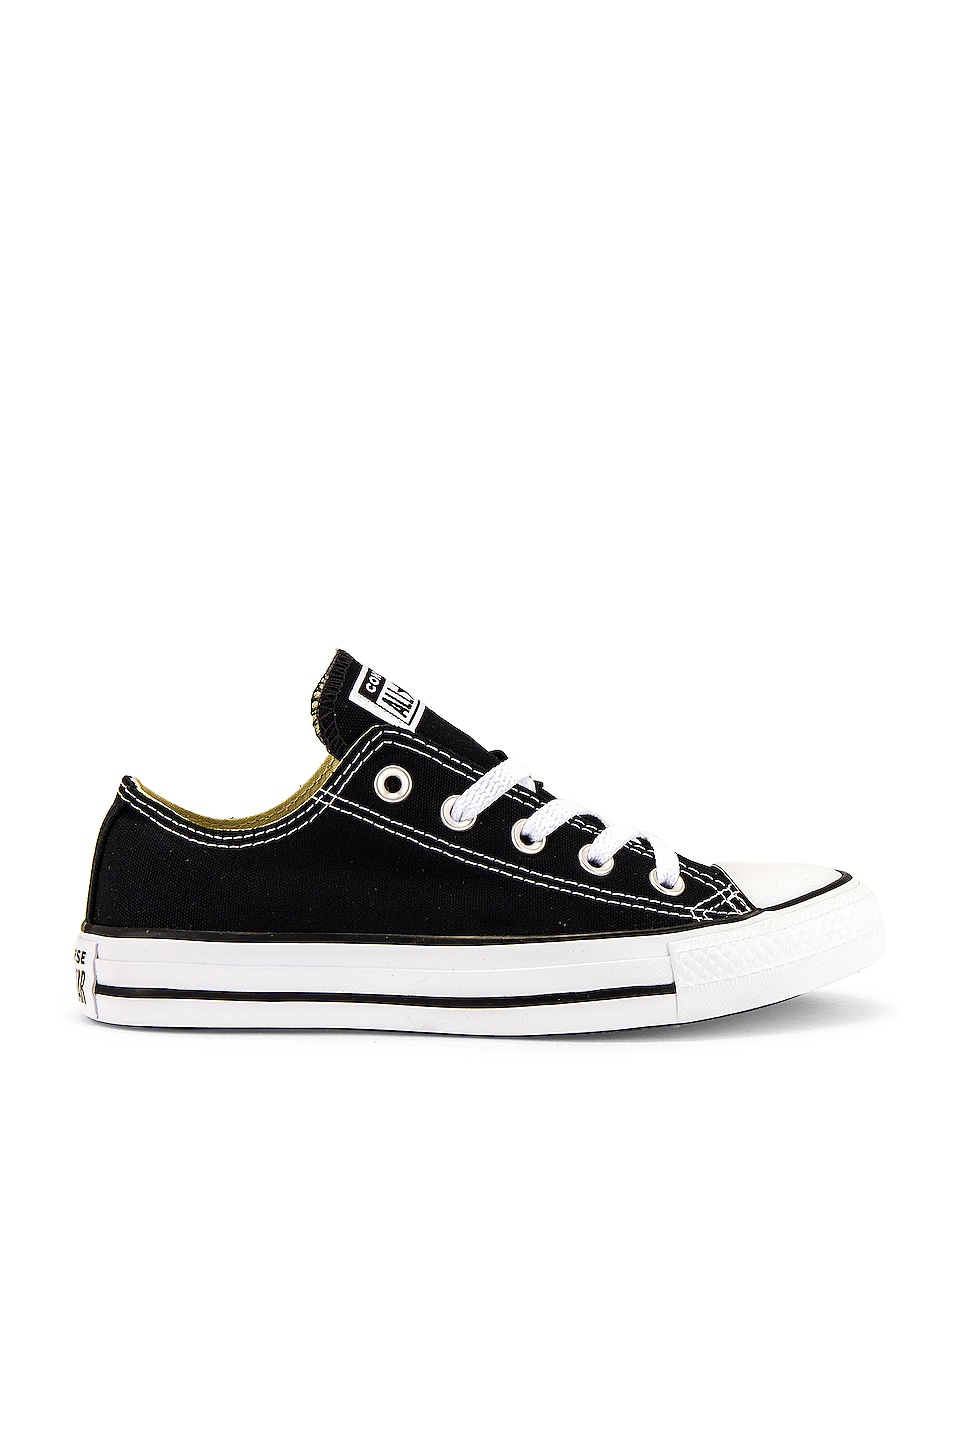 Converse Chuck Taylor All Star Sneaker in Black | REVOLVE